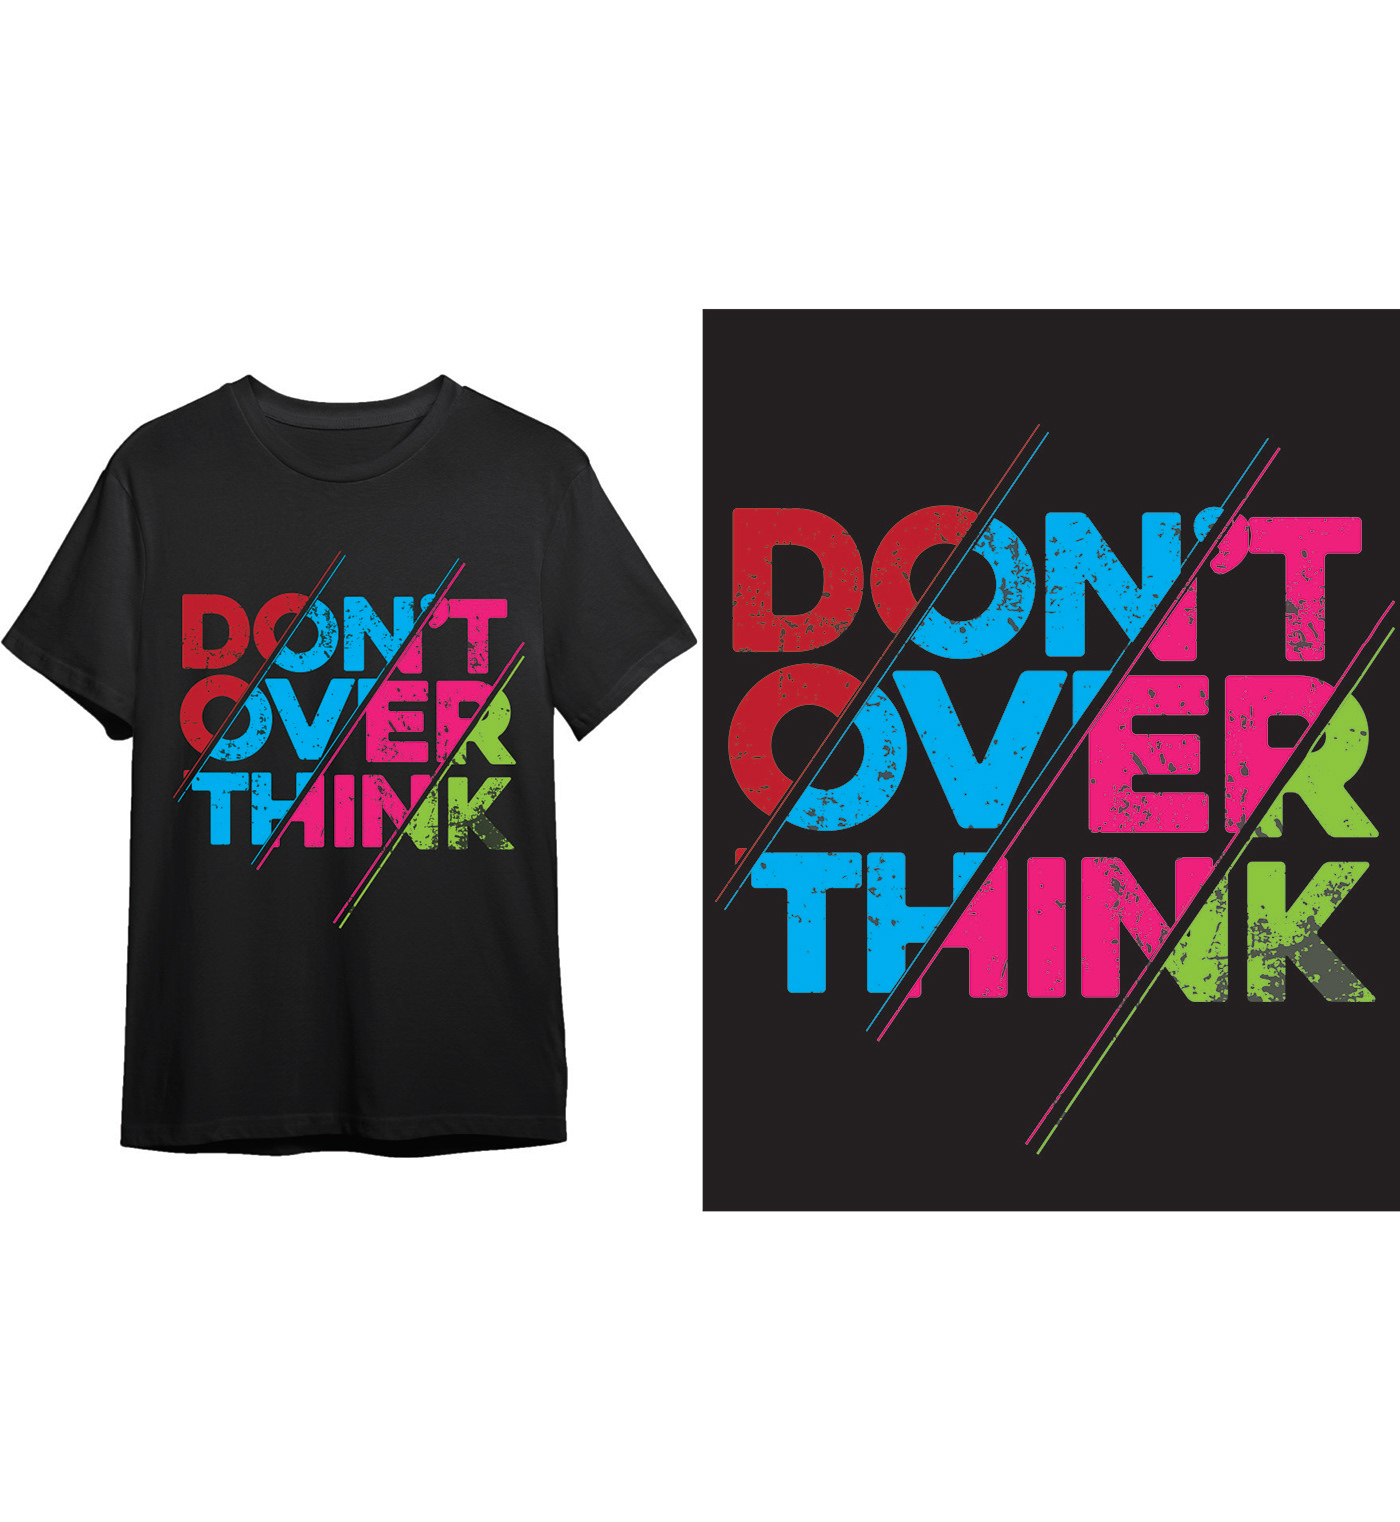 Tshirt Design Clothing t-shirt Graphic Designer t shirt mockup